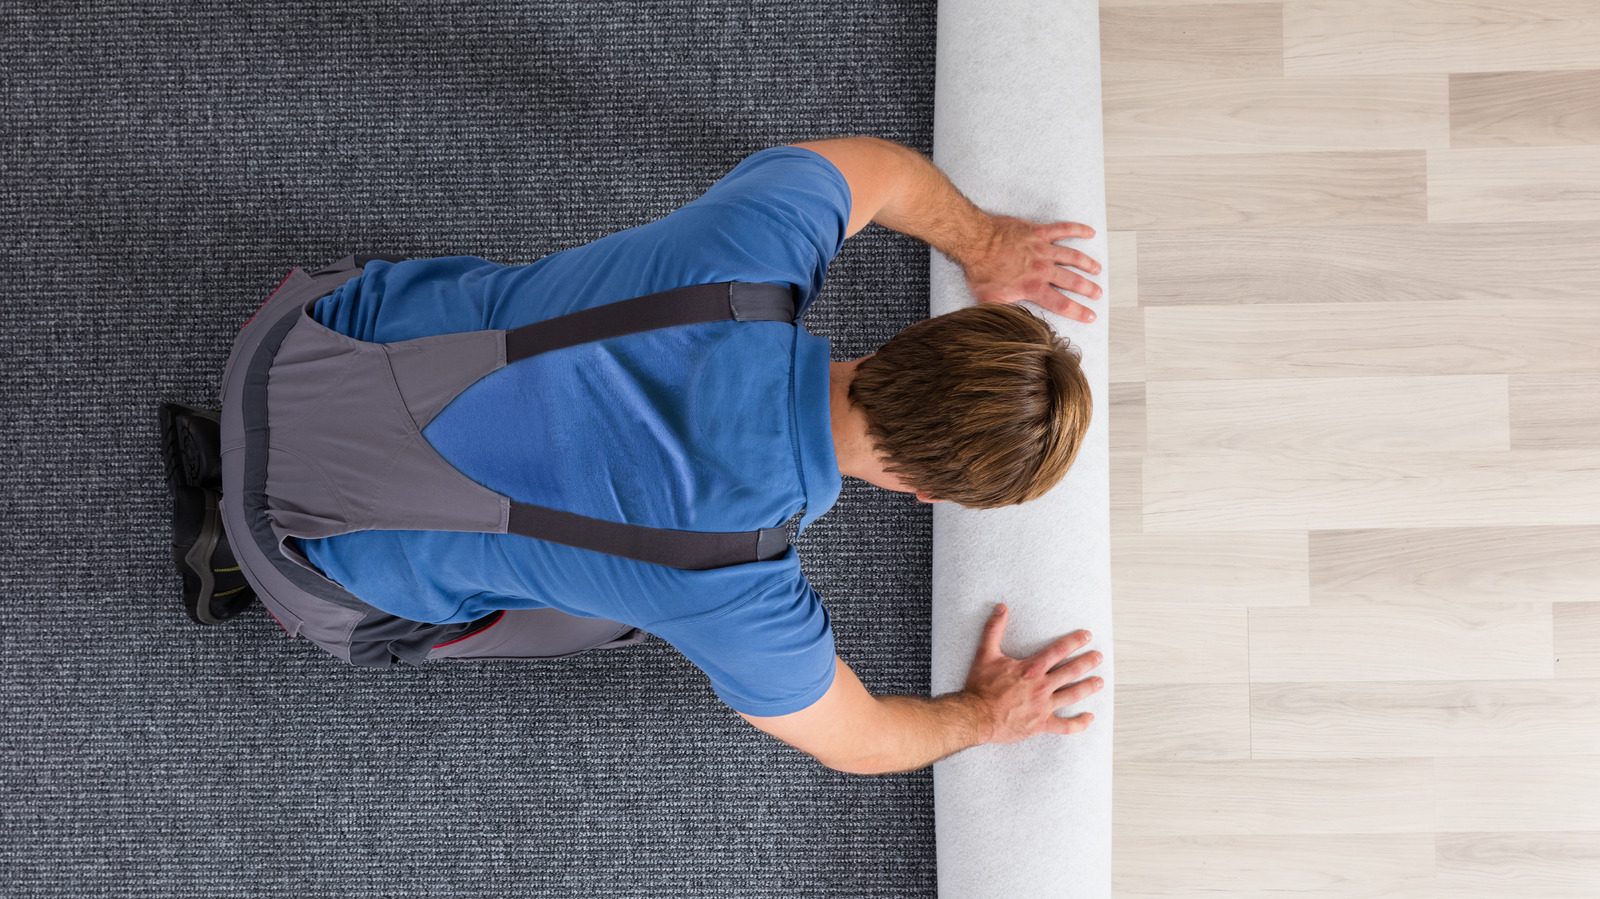 Carpet vs Hardwood Floors: Cost, Resale Value, Maintenance & More